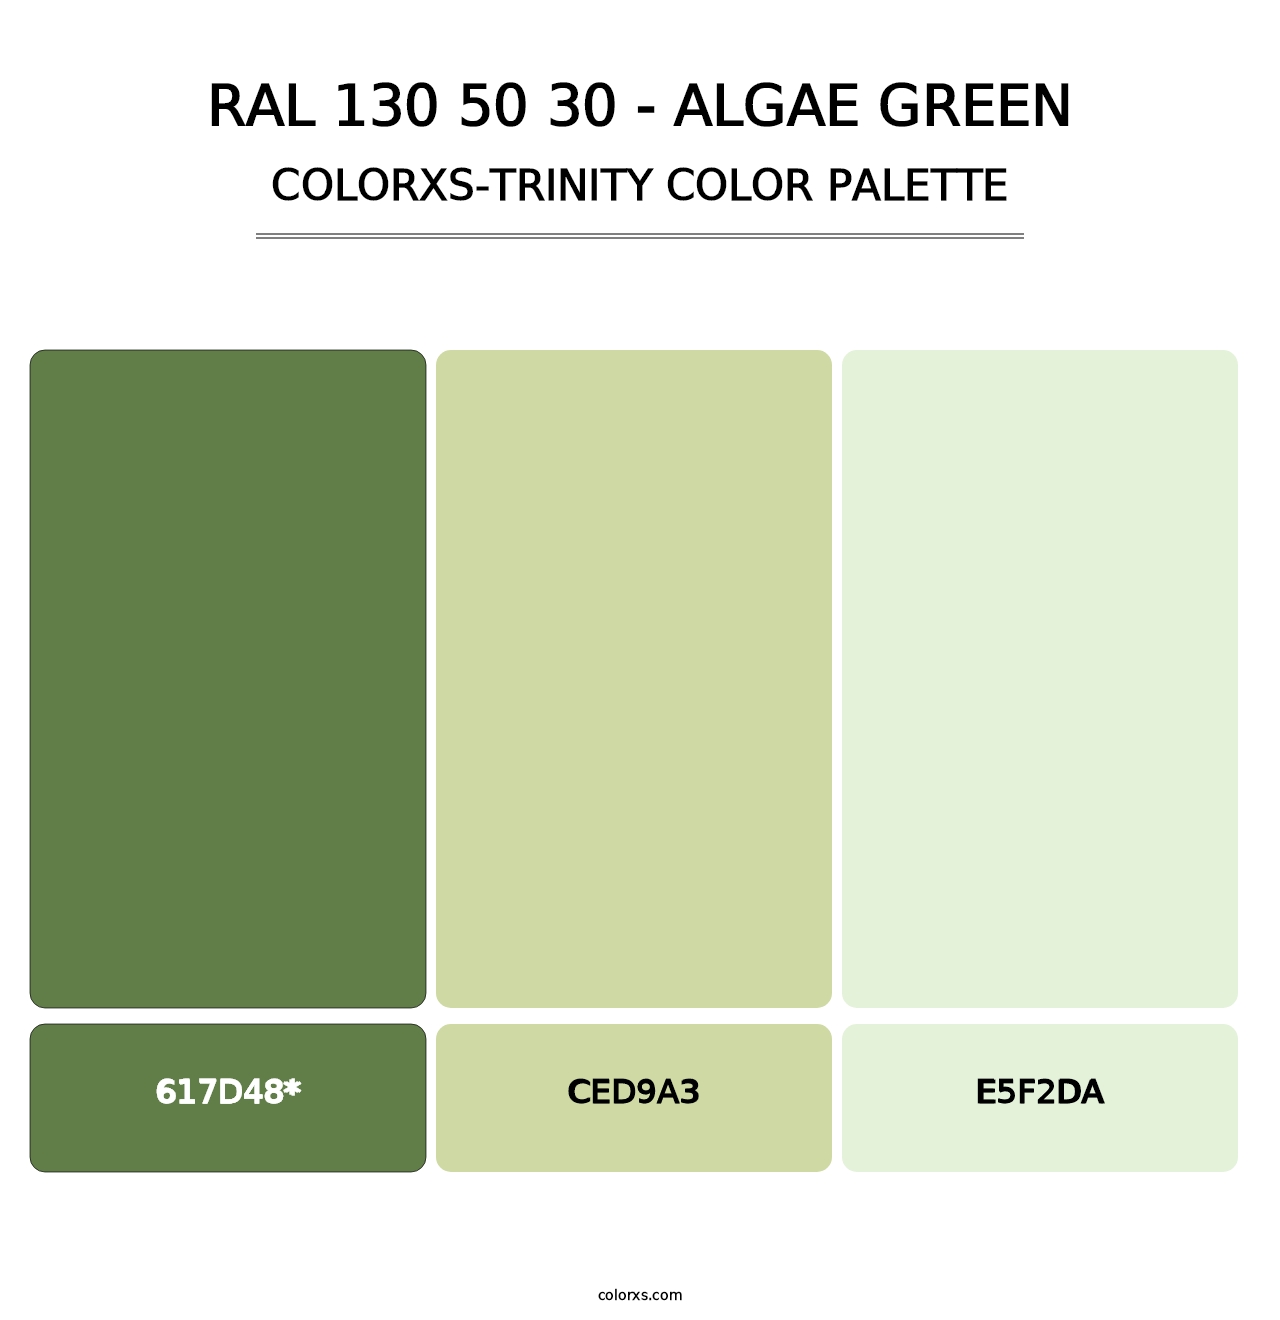 RAL 130 50 30 - Algae Green - Colorxs Trinity Palette